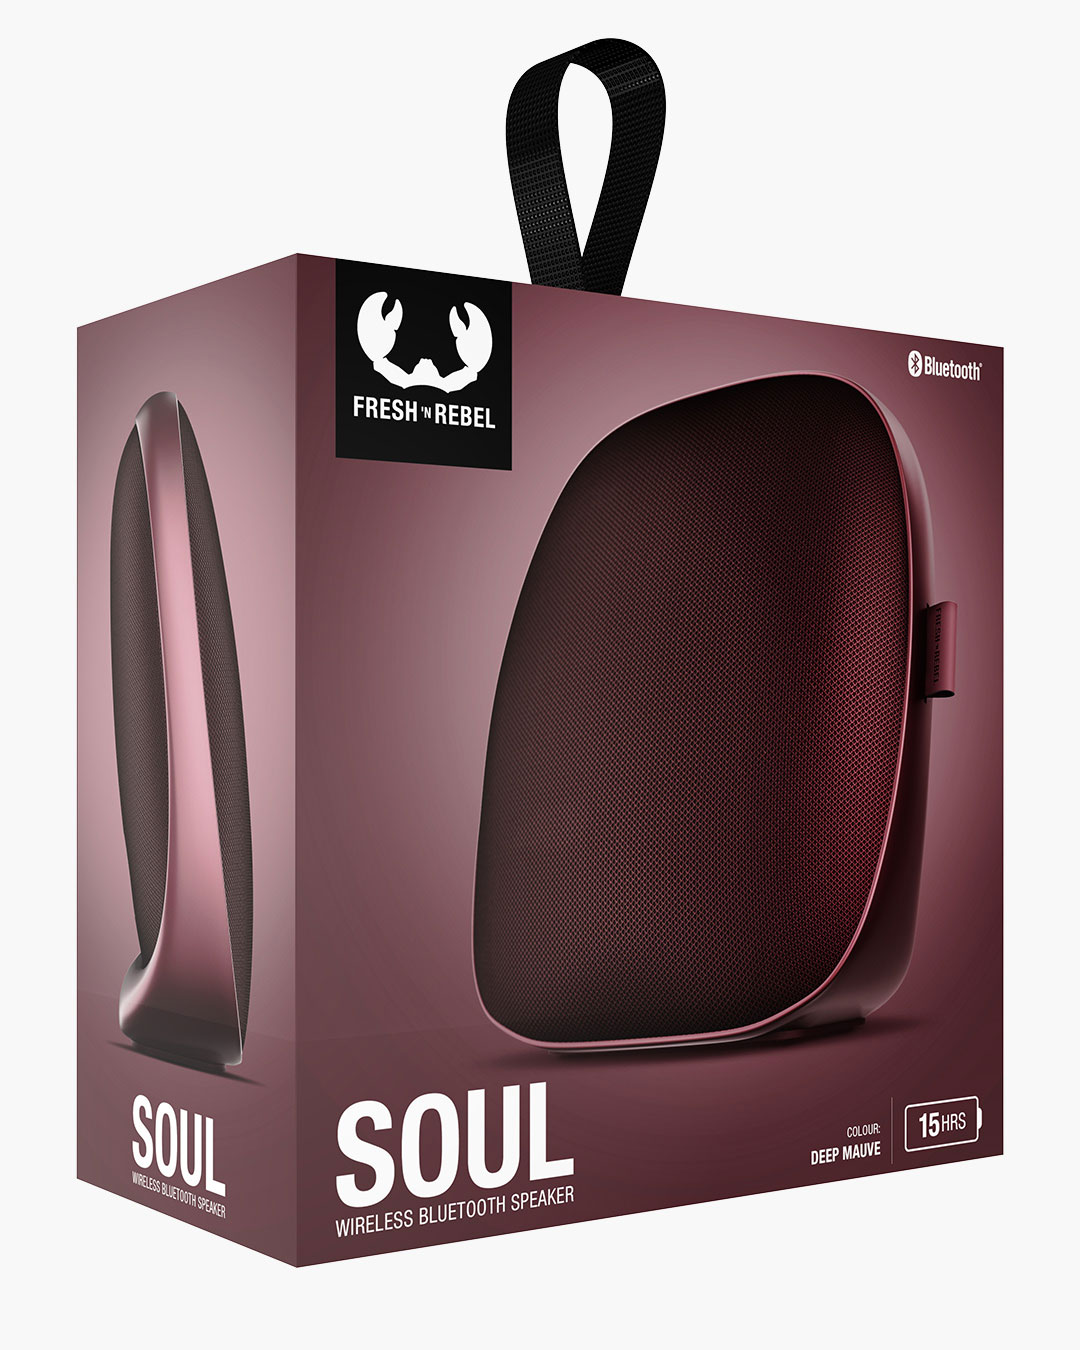 Fresh 'n Rebel - Soul - Wireless Bluetooth home speaker - Deep Mauve